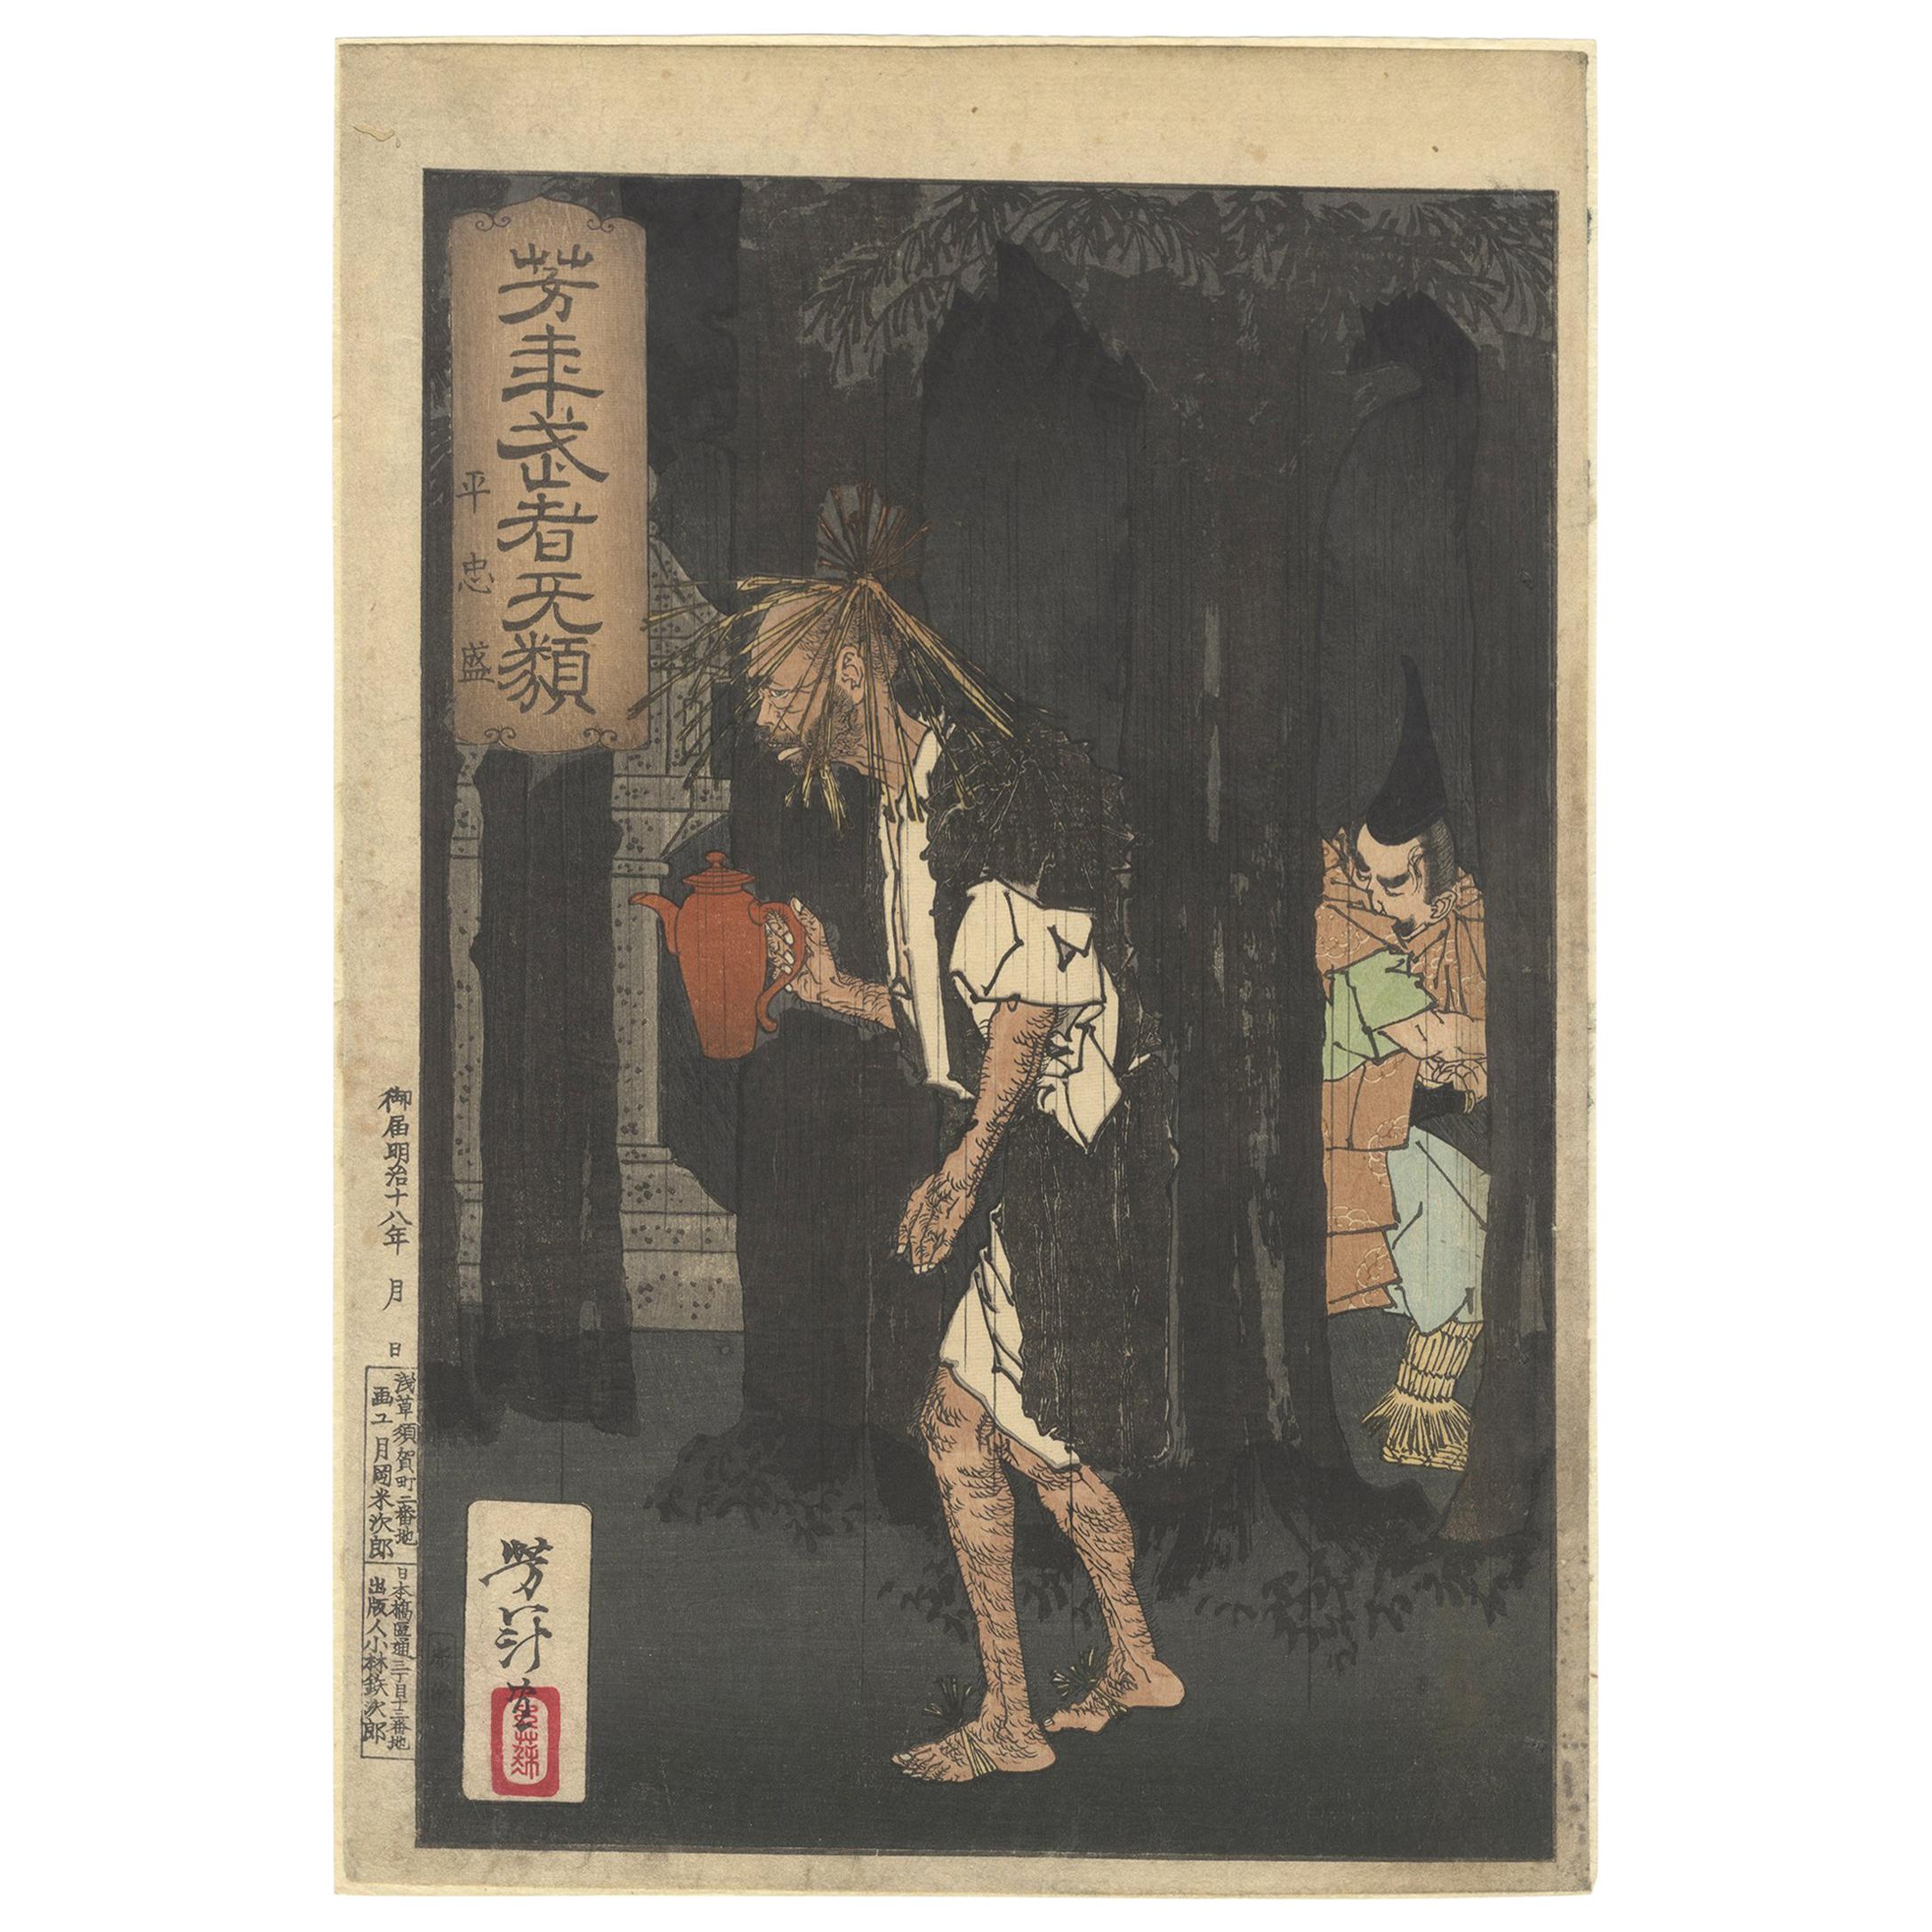 Yoshitoshi, Original Japanese Woodblock Print, Floating World Art, Night, Black For Sale